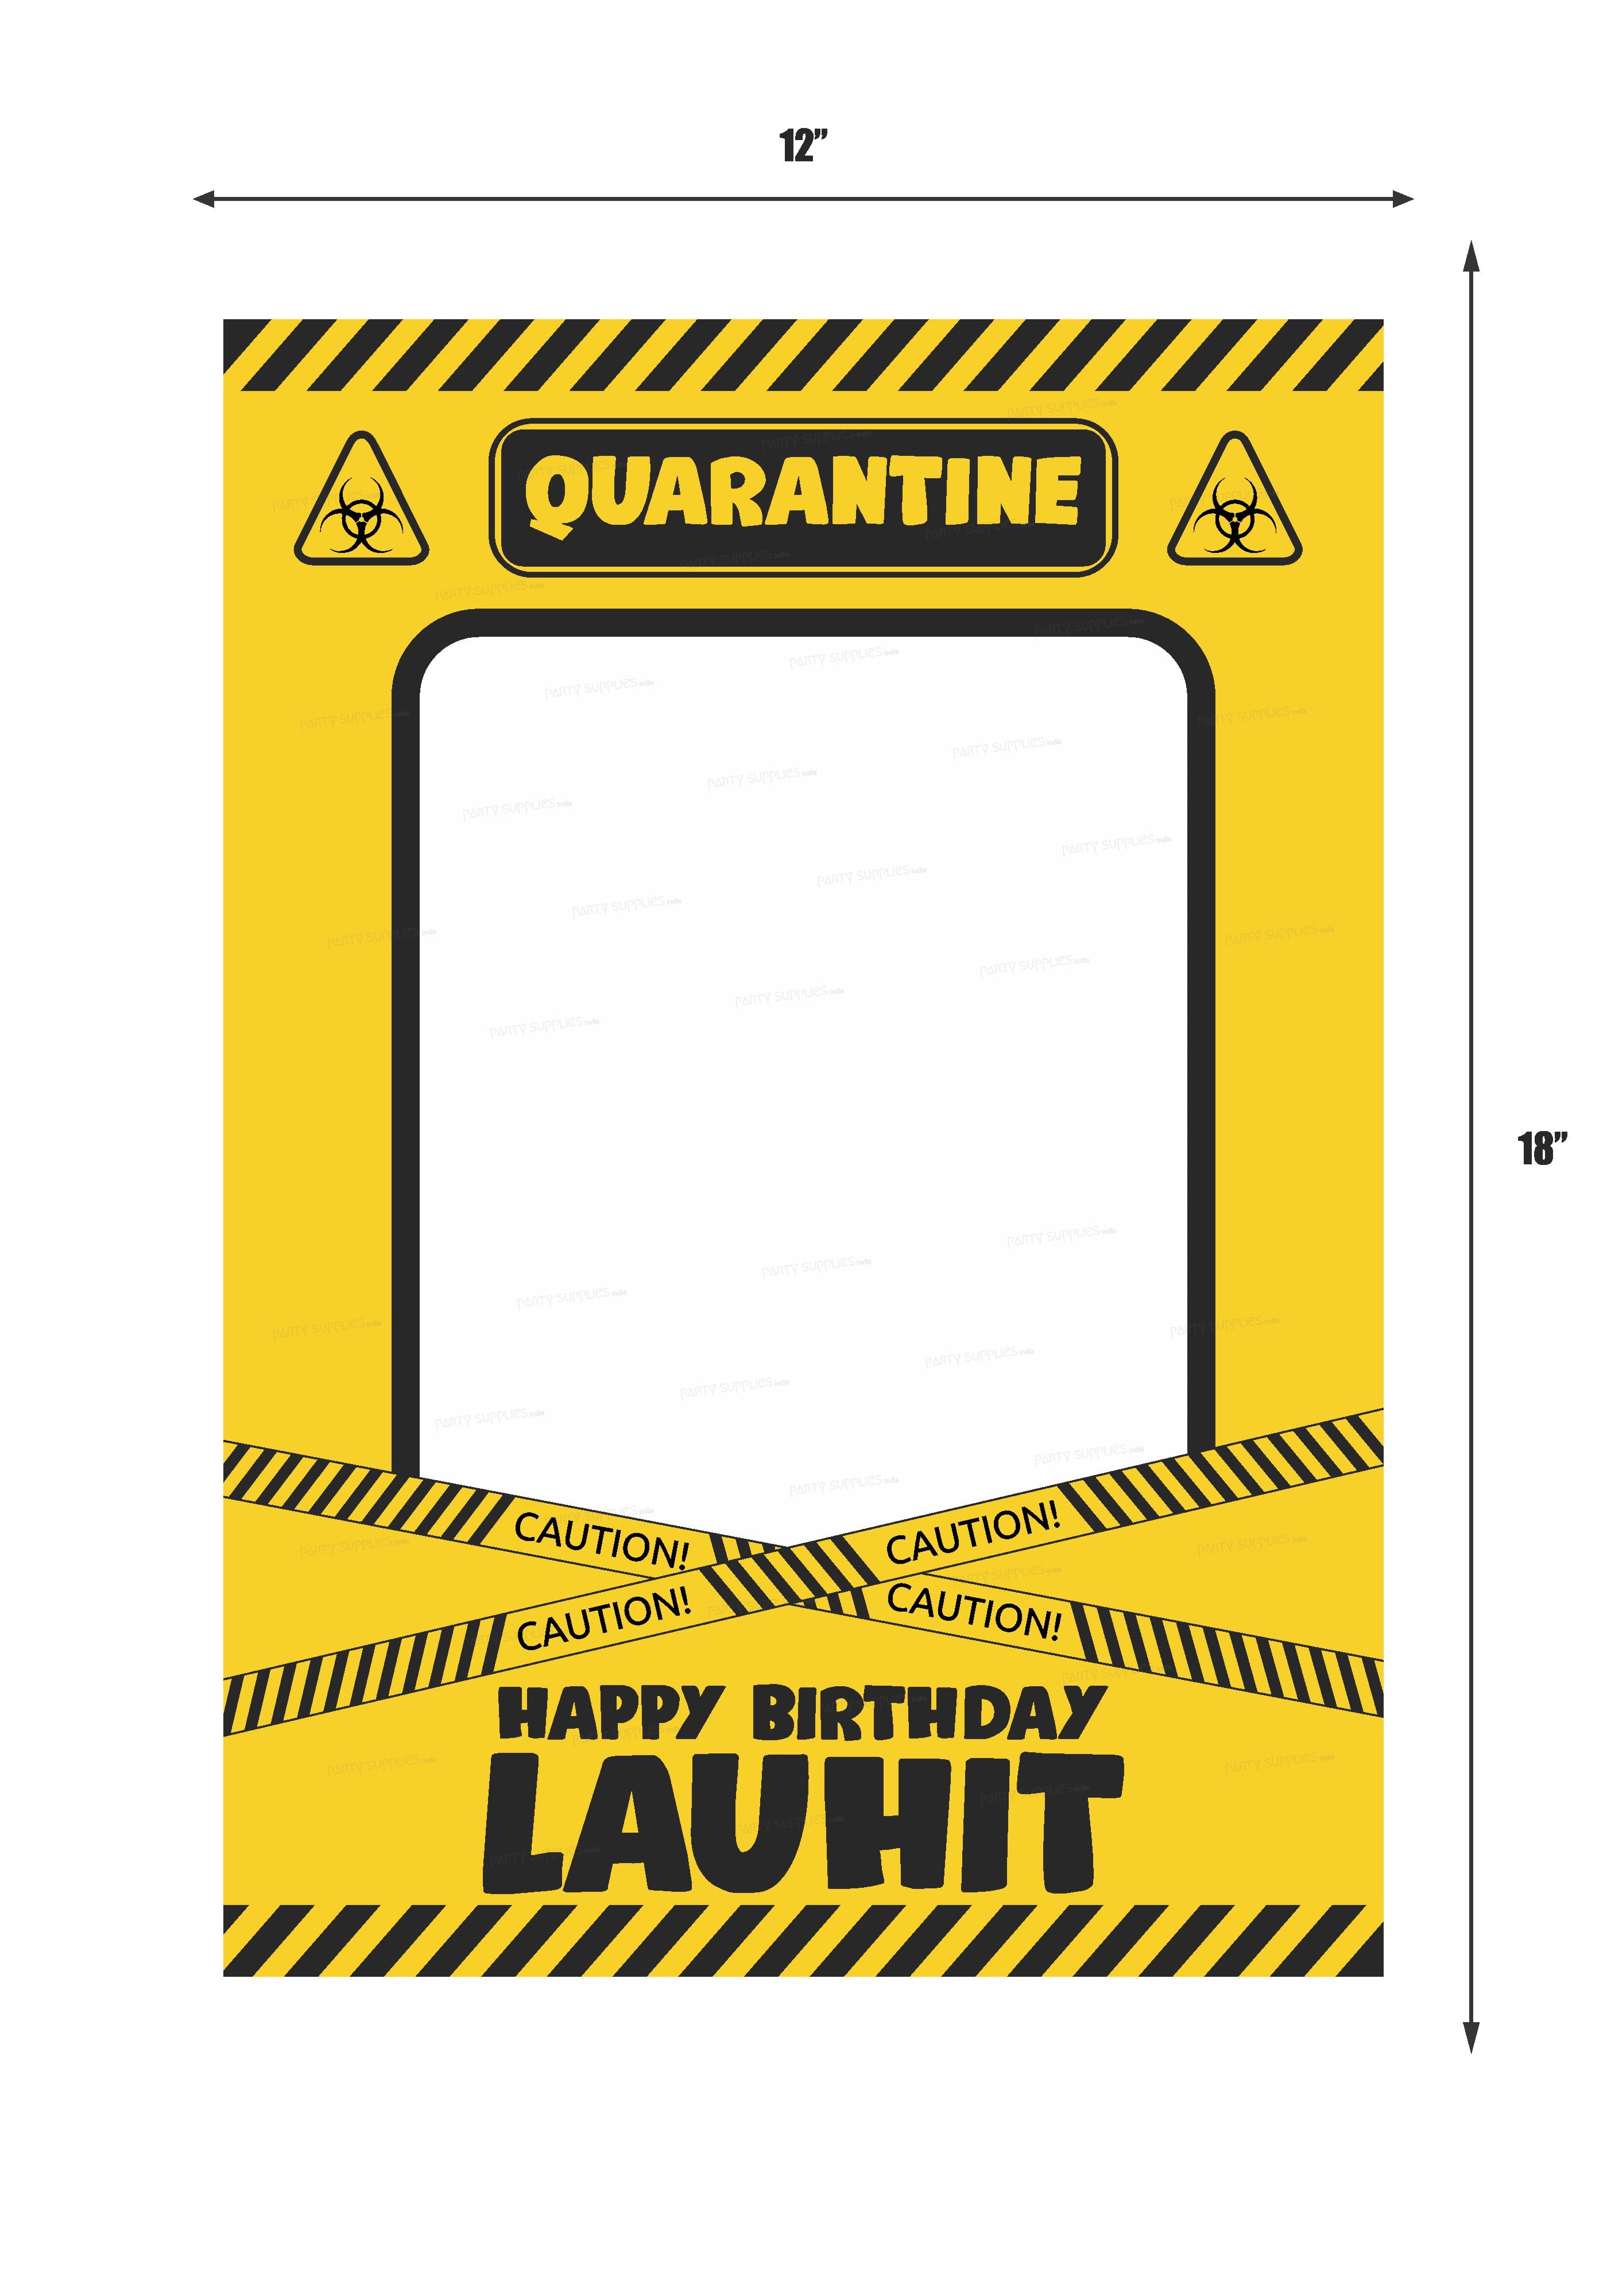 PSI Quarantine Theme Customized PhotoBooth